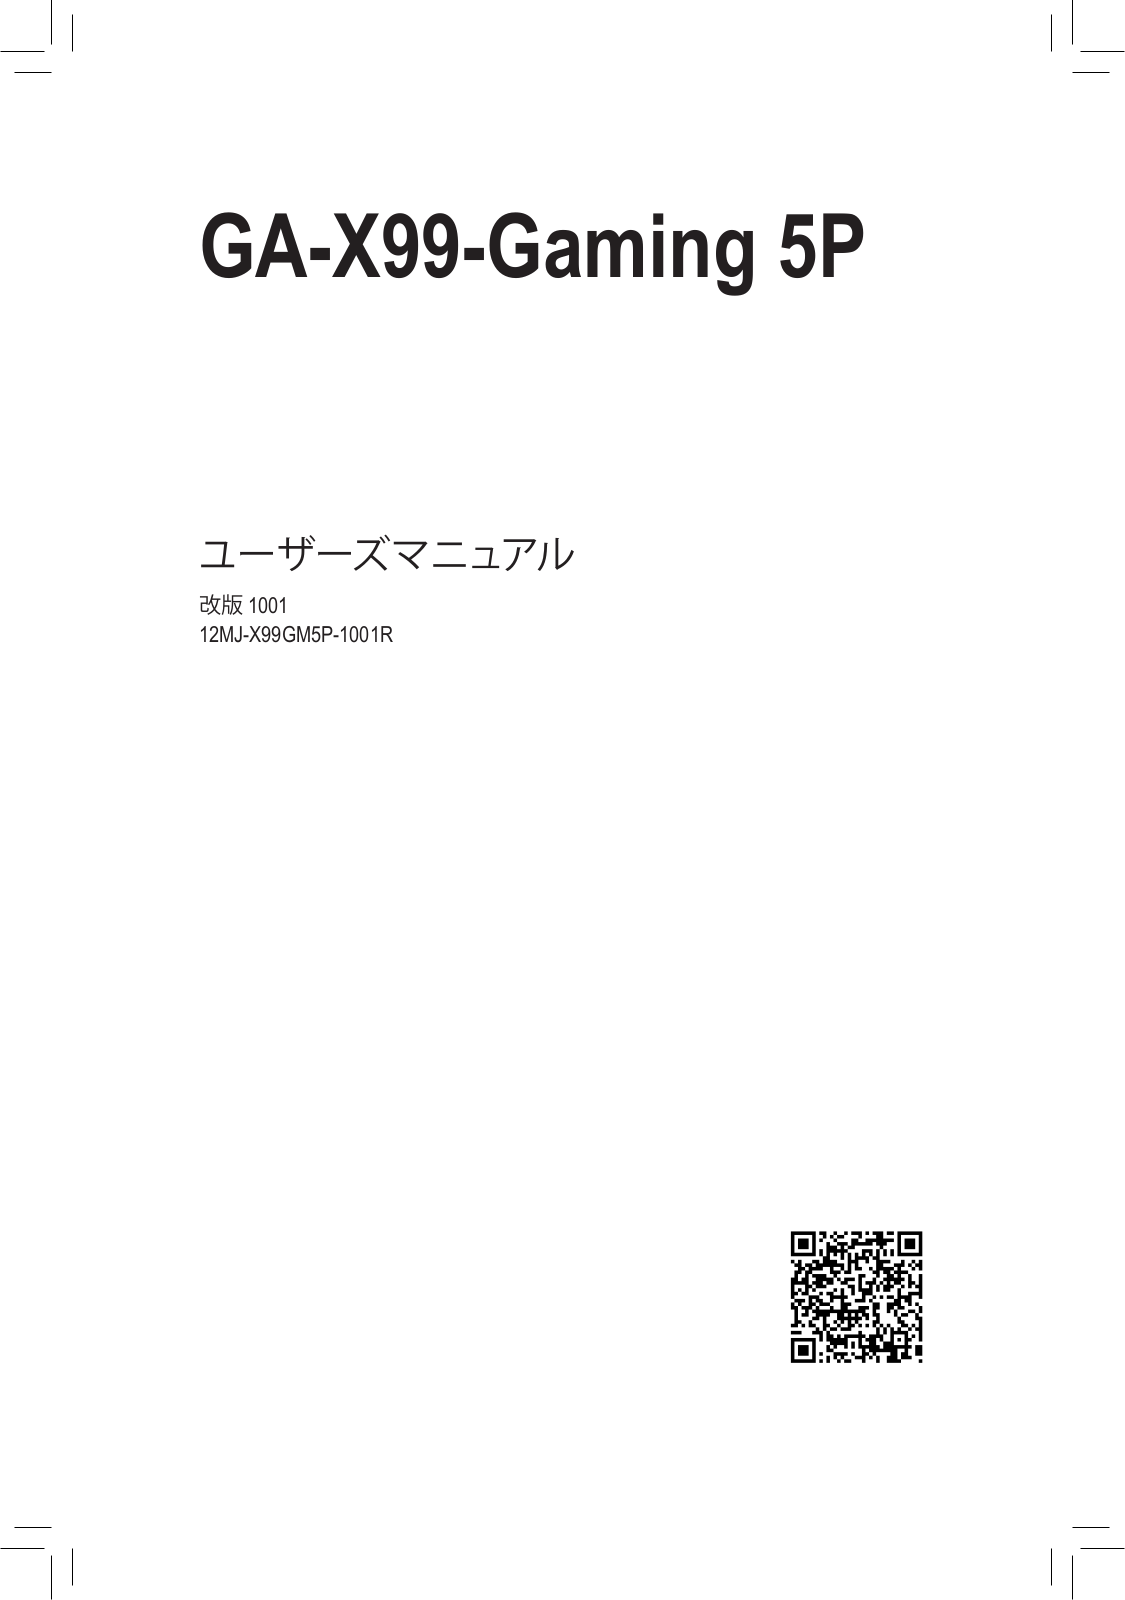 Gigabyte GA-X99-GAMING 5P User Manual